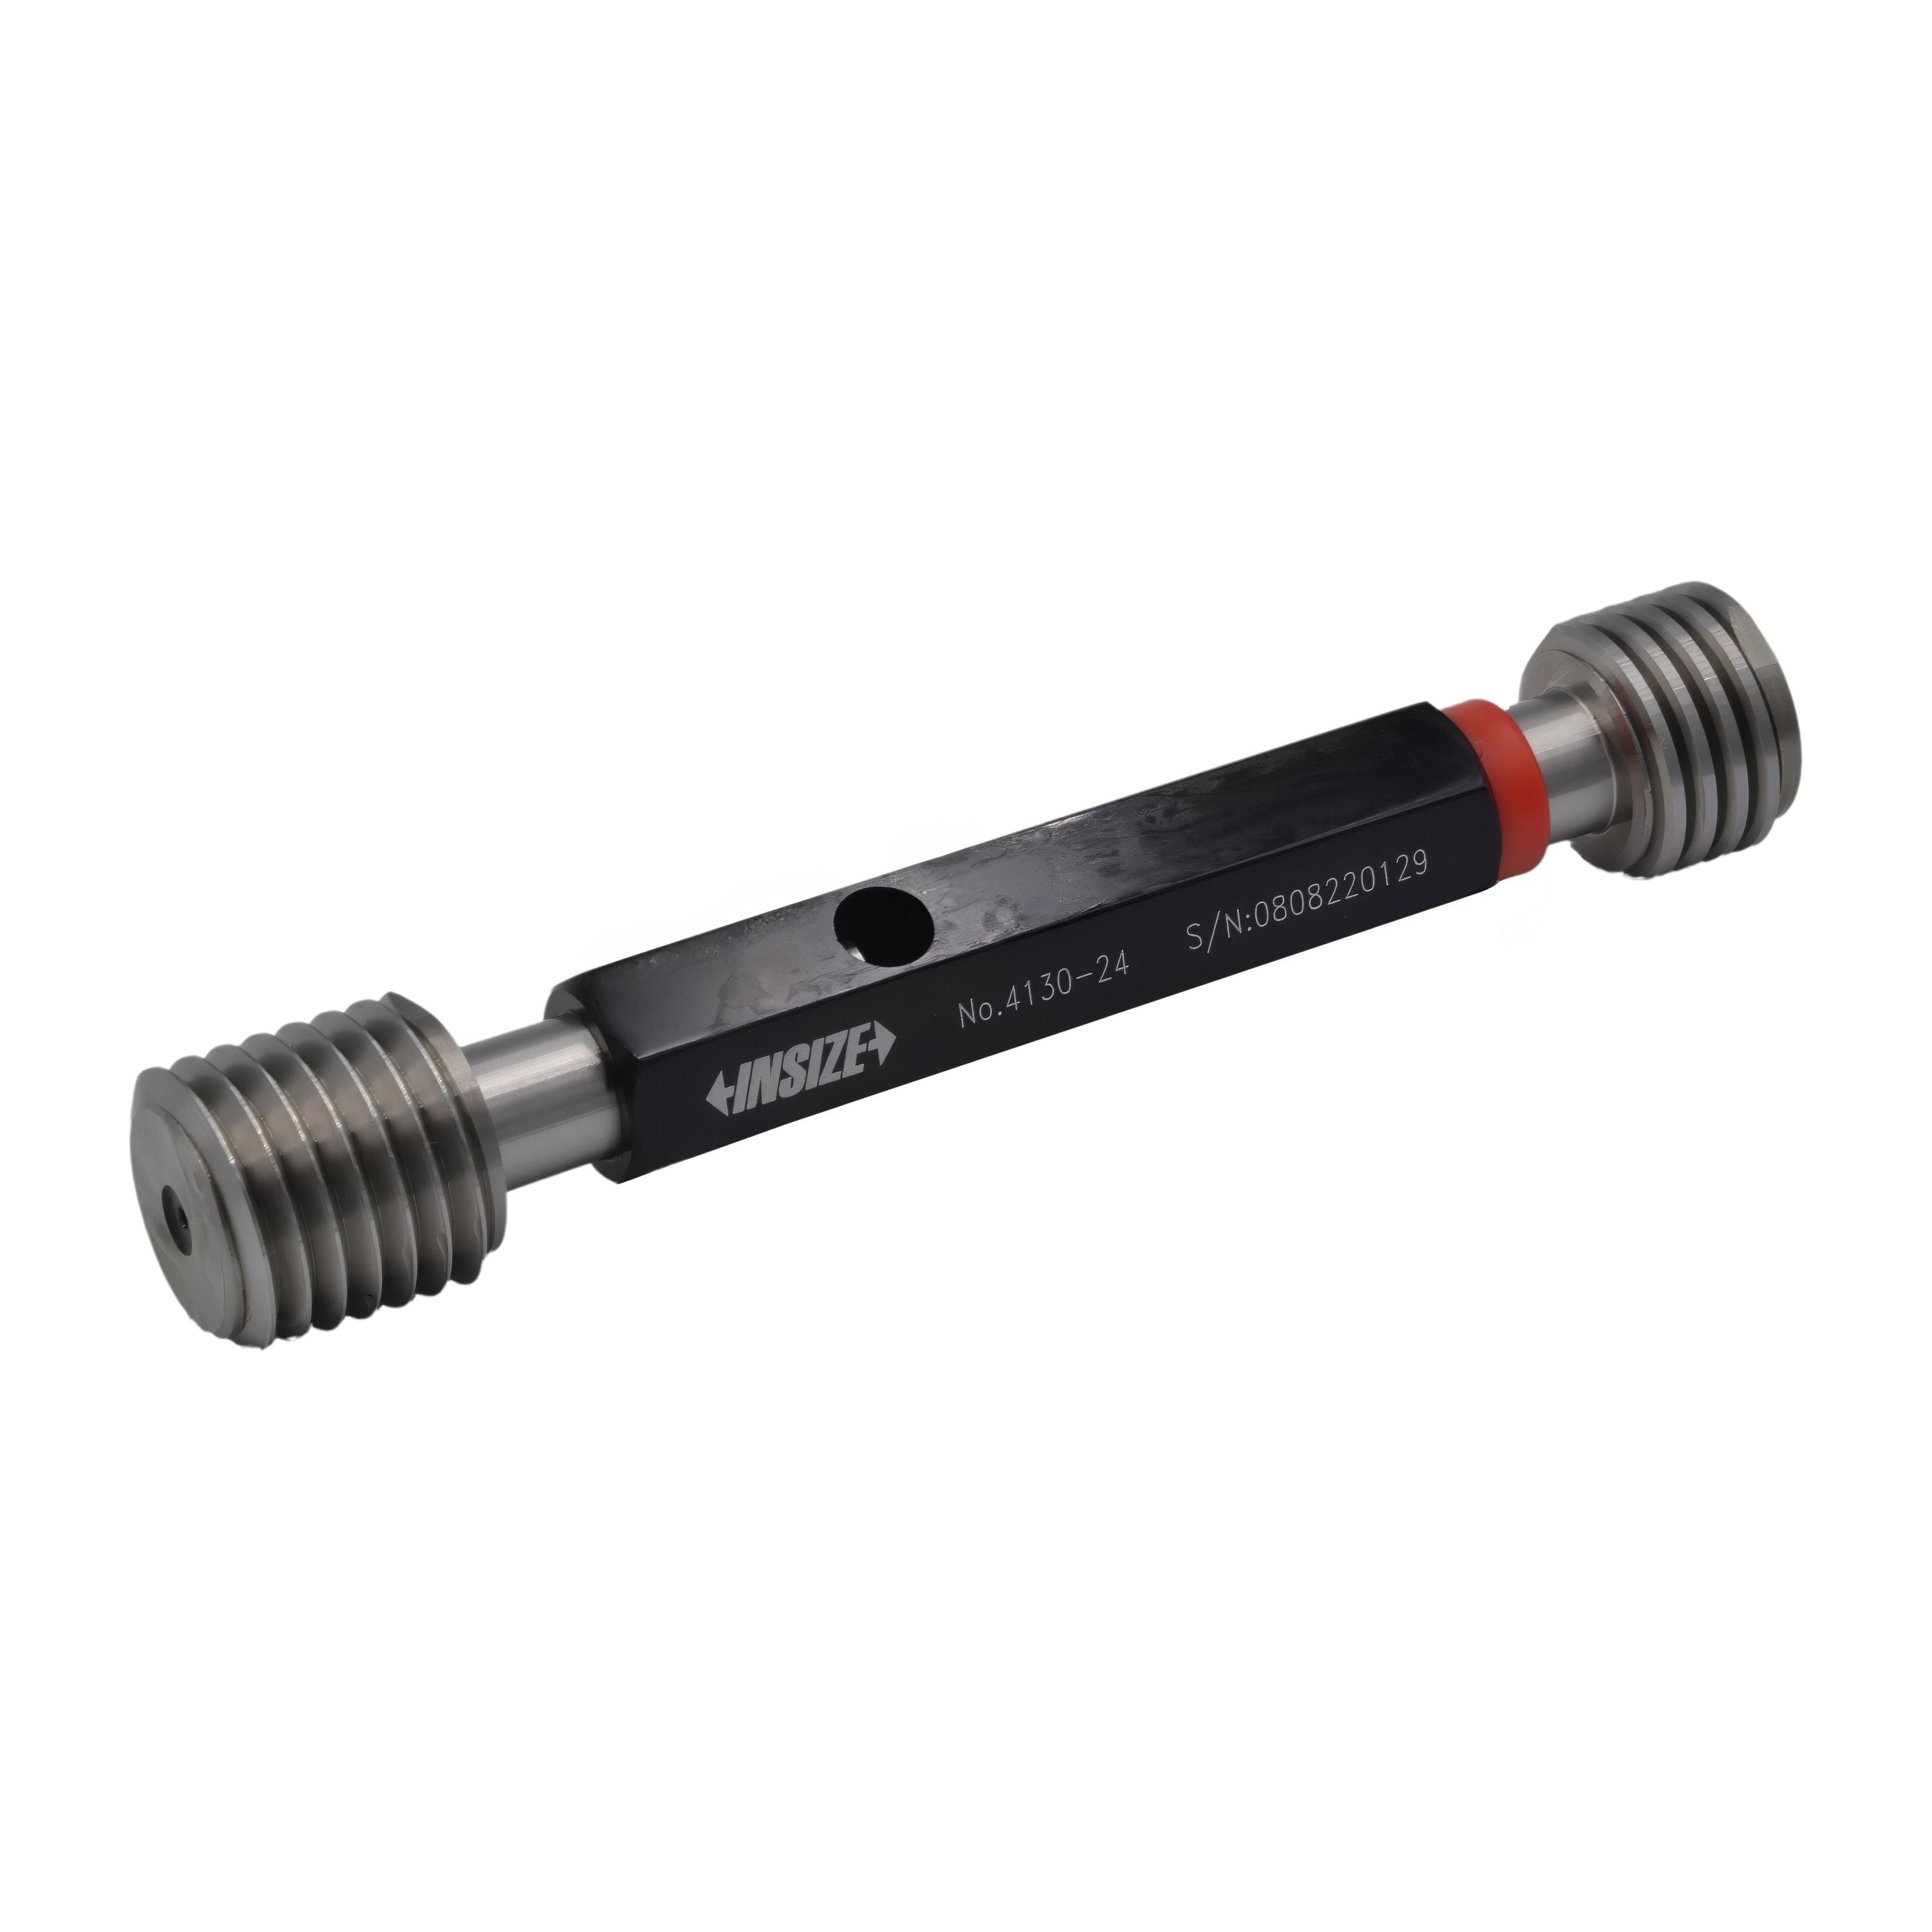 Insize Thread GO NOGO Plug Gauge M24x3mm Series 4130-24